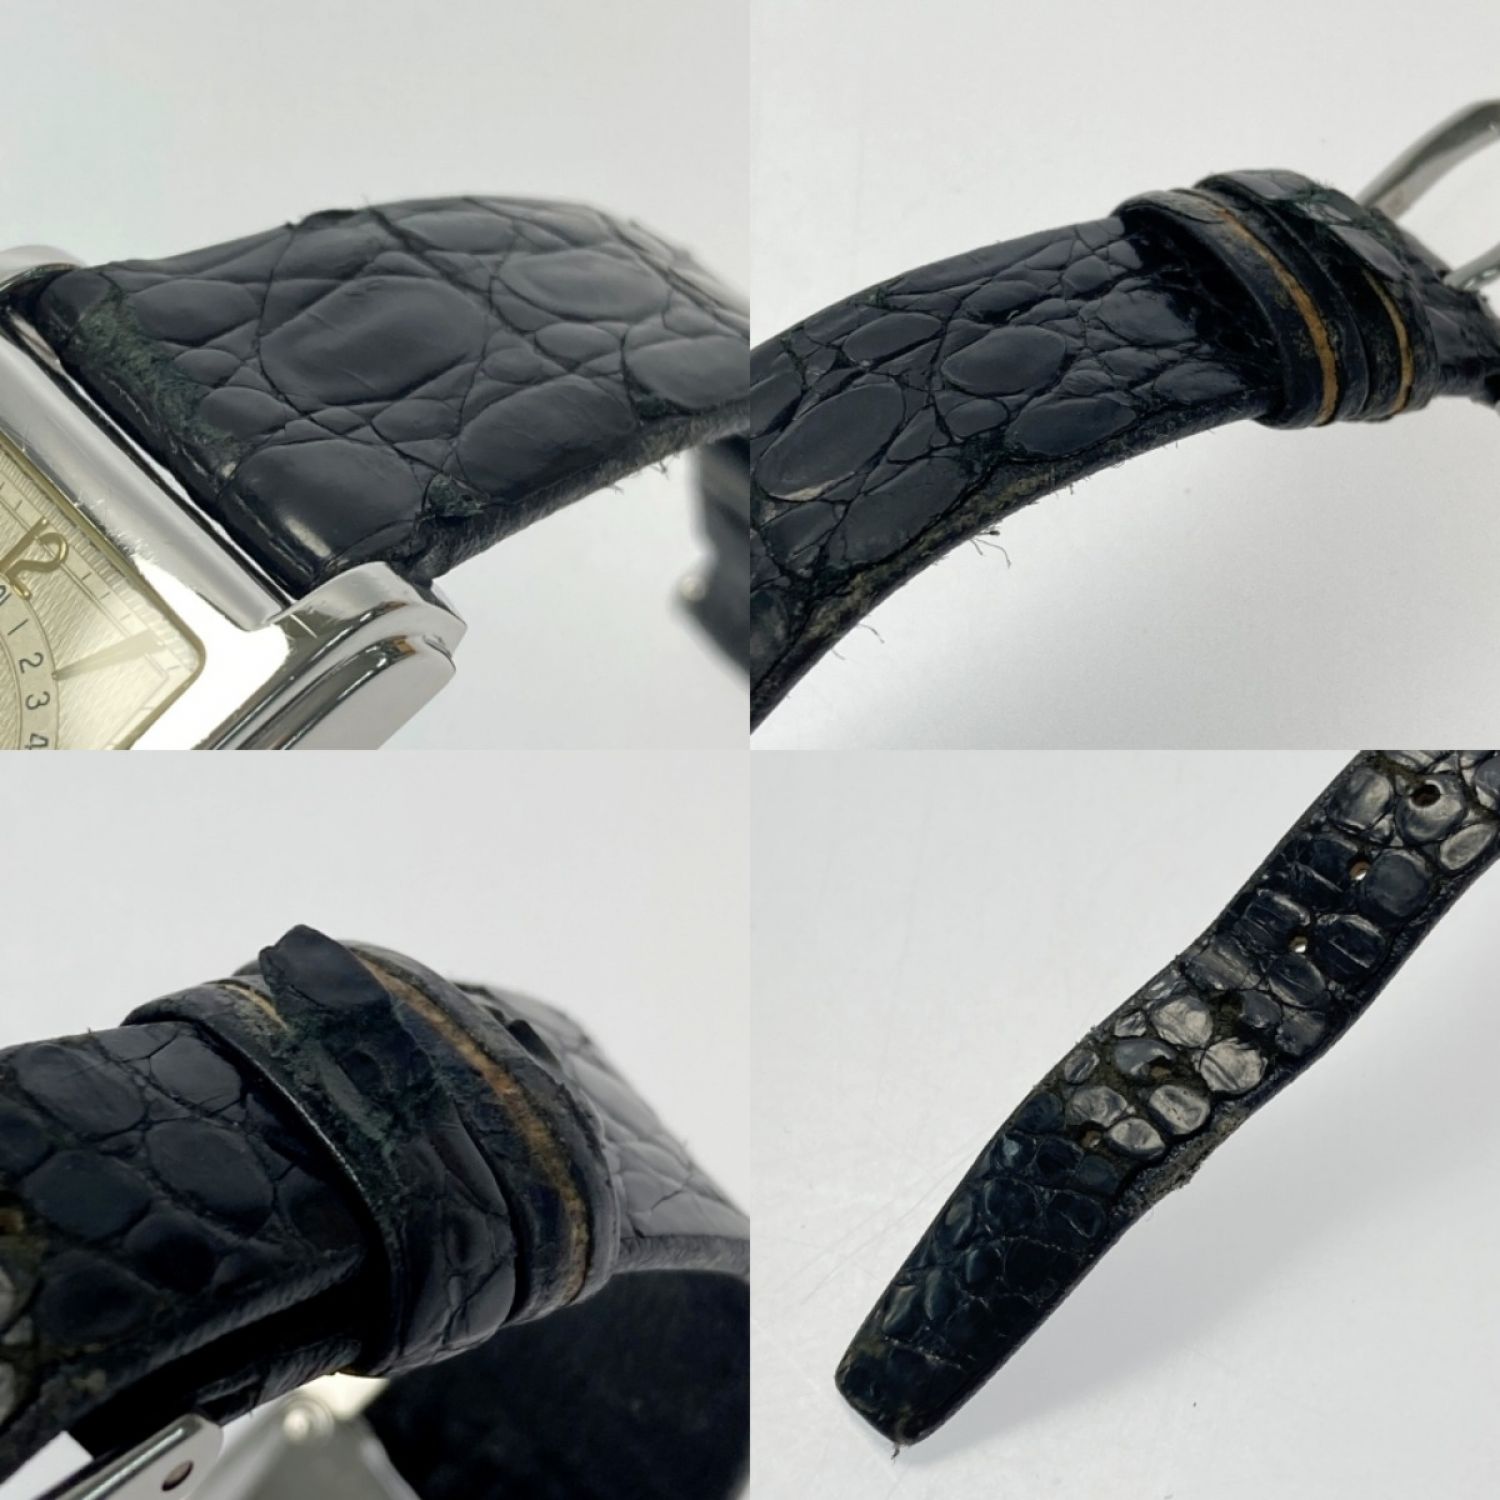 ☆☆ORIS オリス レクタンギュラー ポインターデイト B7460 自動巻き メンズ 腕時計